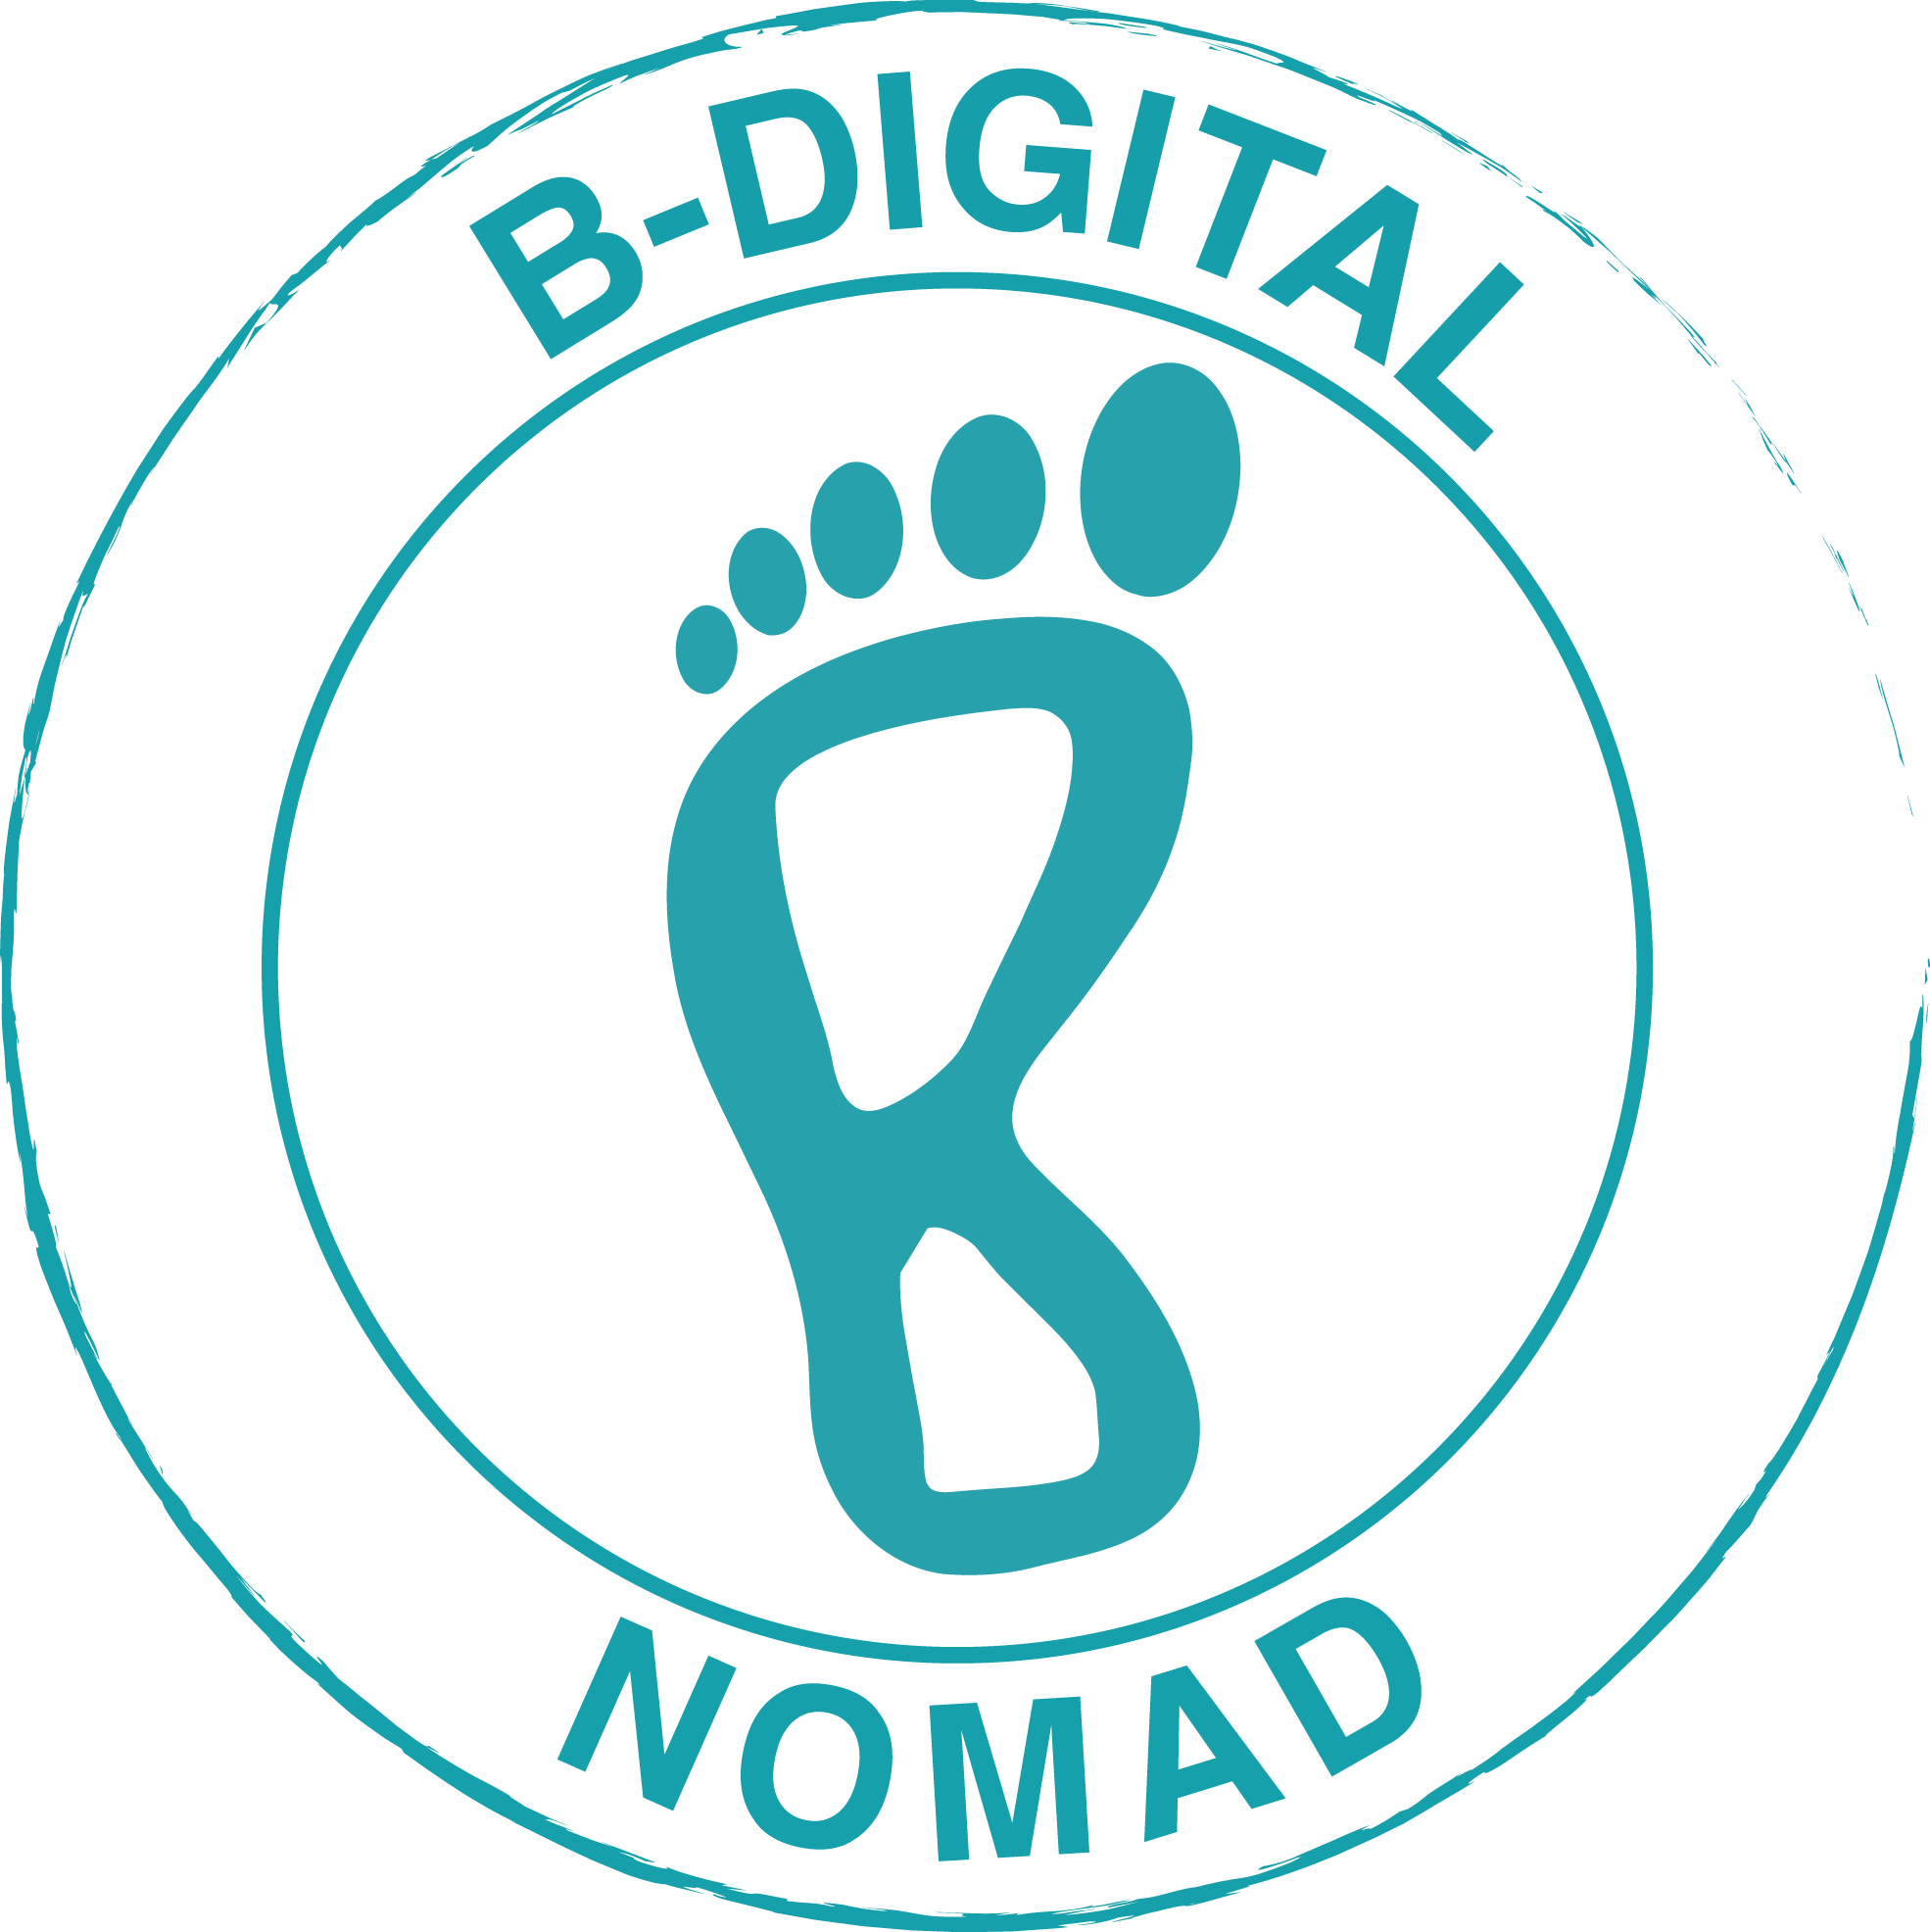 B-Digital Nomad